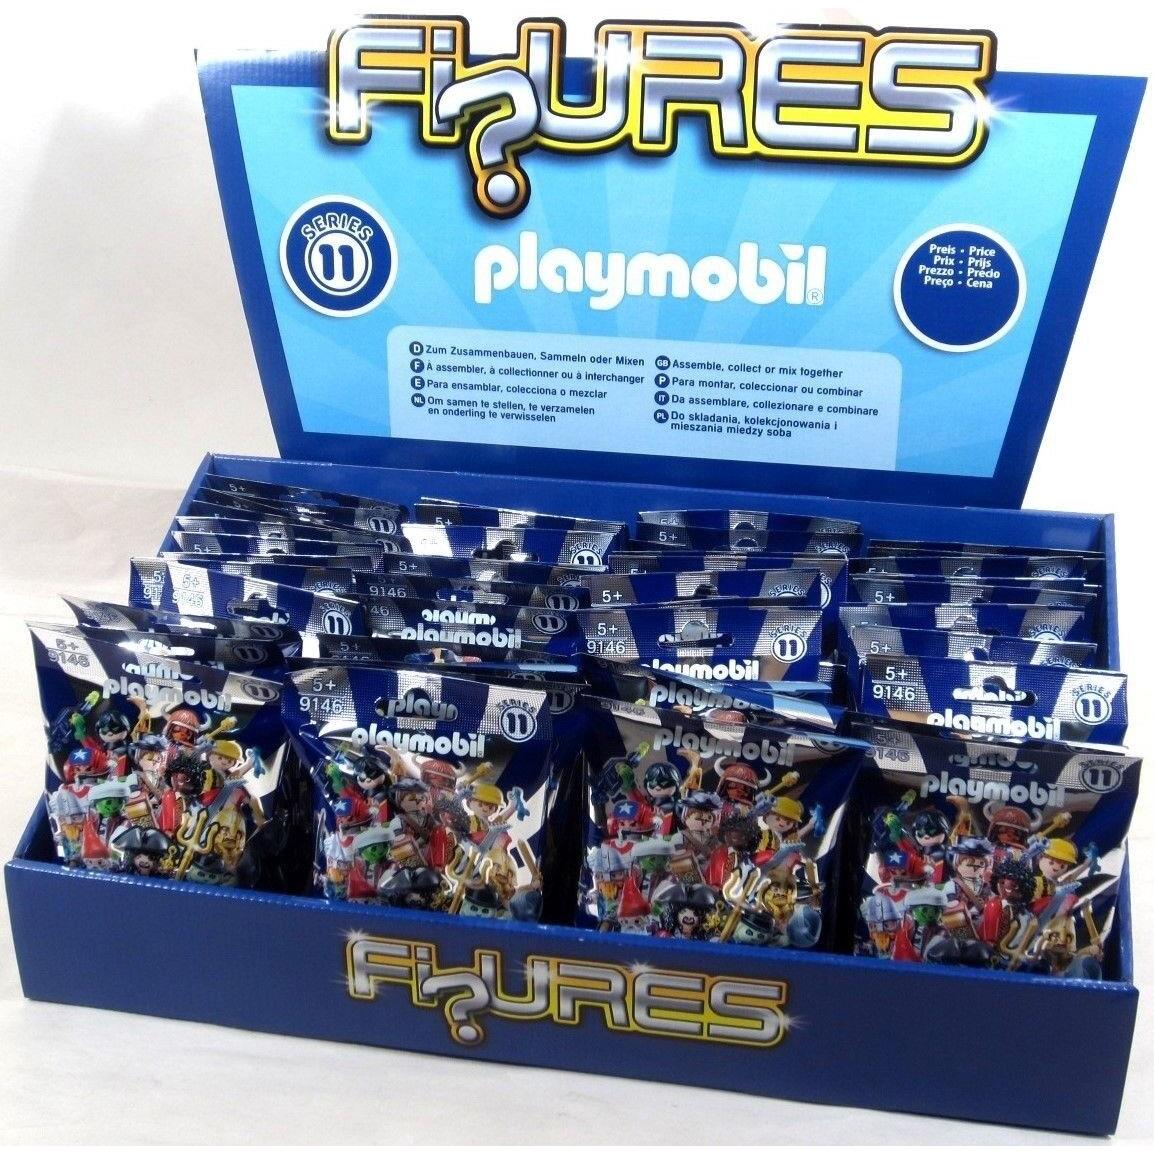 Playmobil 9146 Blue Boys Series 11 Mini Figure Case of 48 Mystery Blind Bags